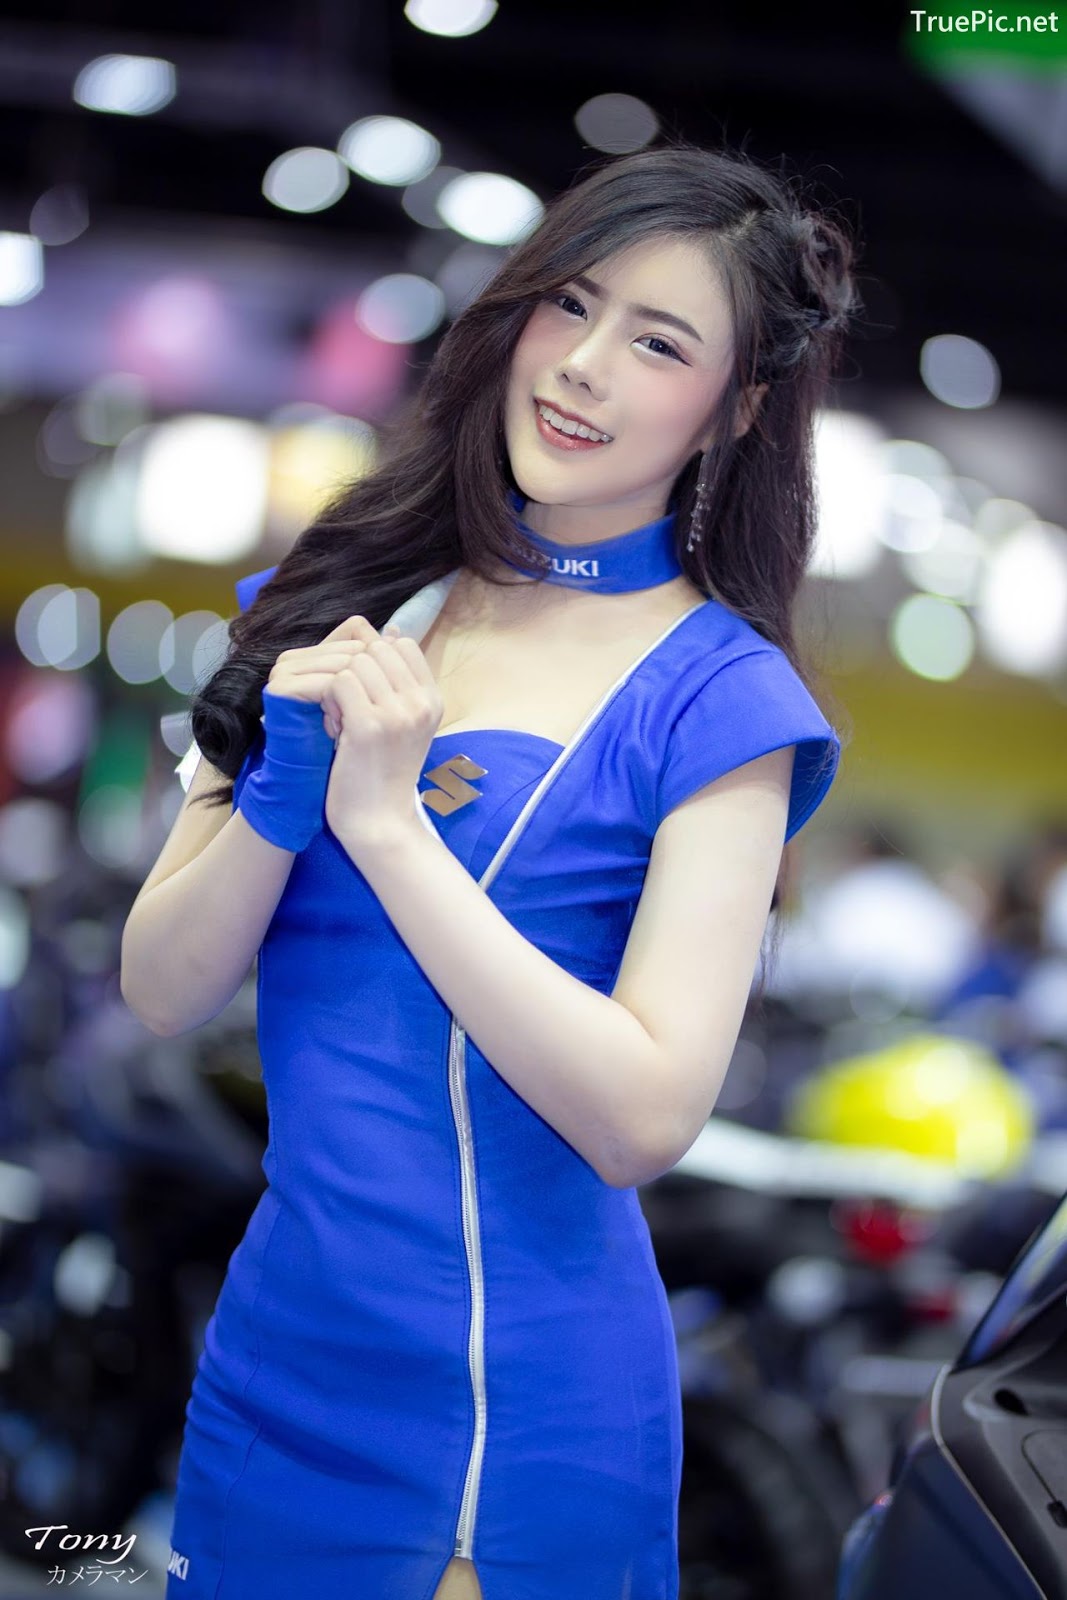 Image-Thailand-Hot-Model-Thai-Racing-Girl-At-Big-Motor-2018-TruePic.net- Picture-80